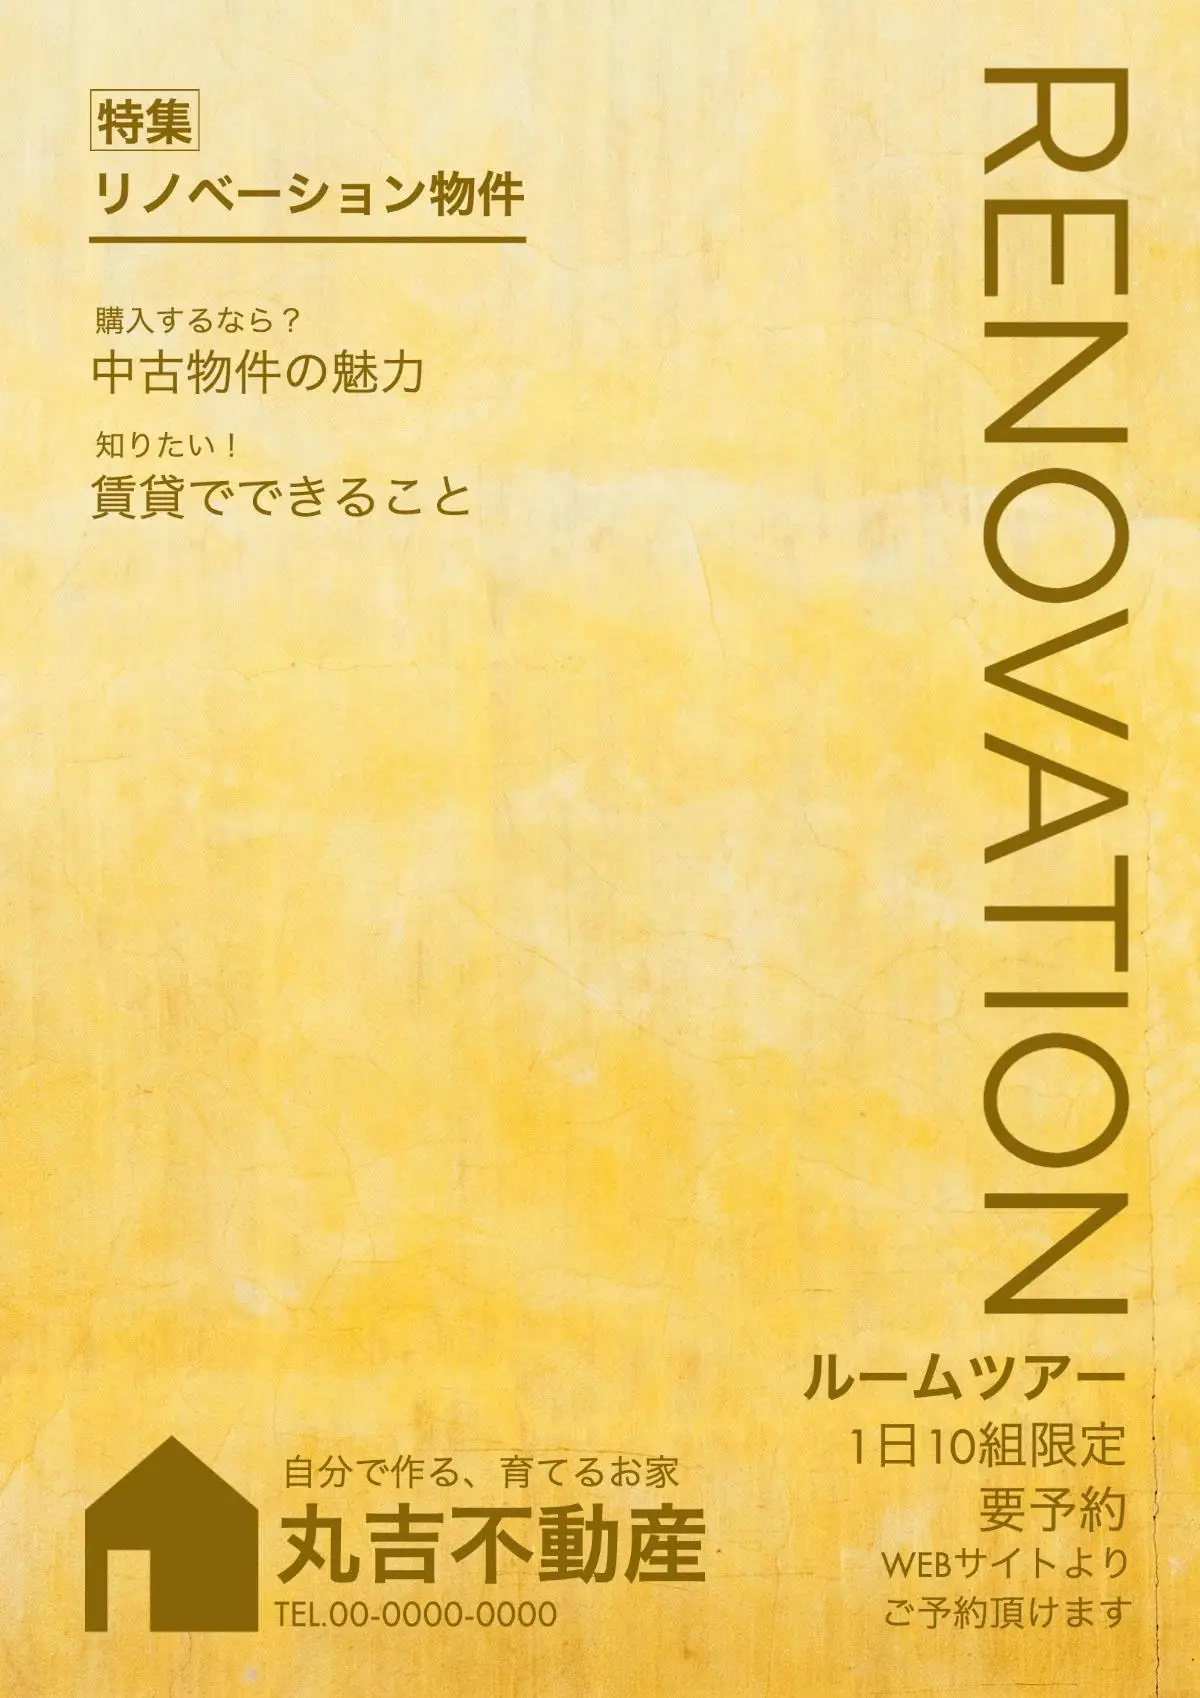 Yellow renovation flyer